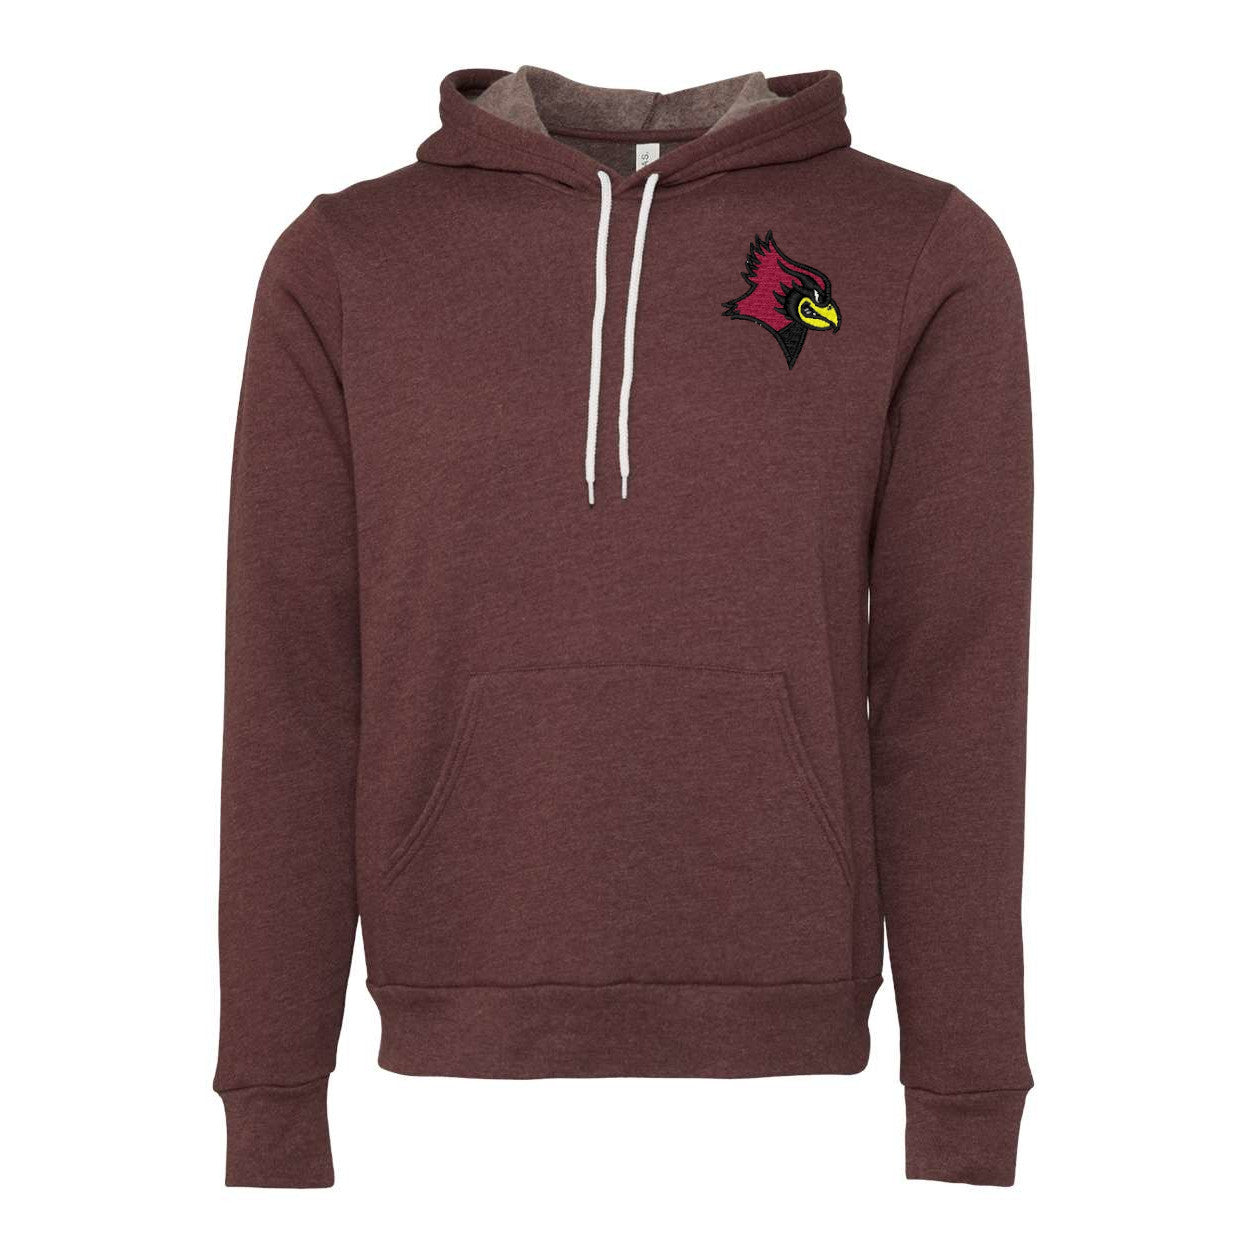 Redbird Hoodie Sweatshirt - 2 colors/styles available